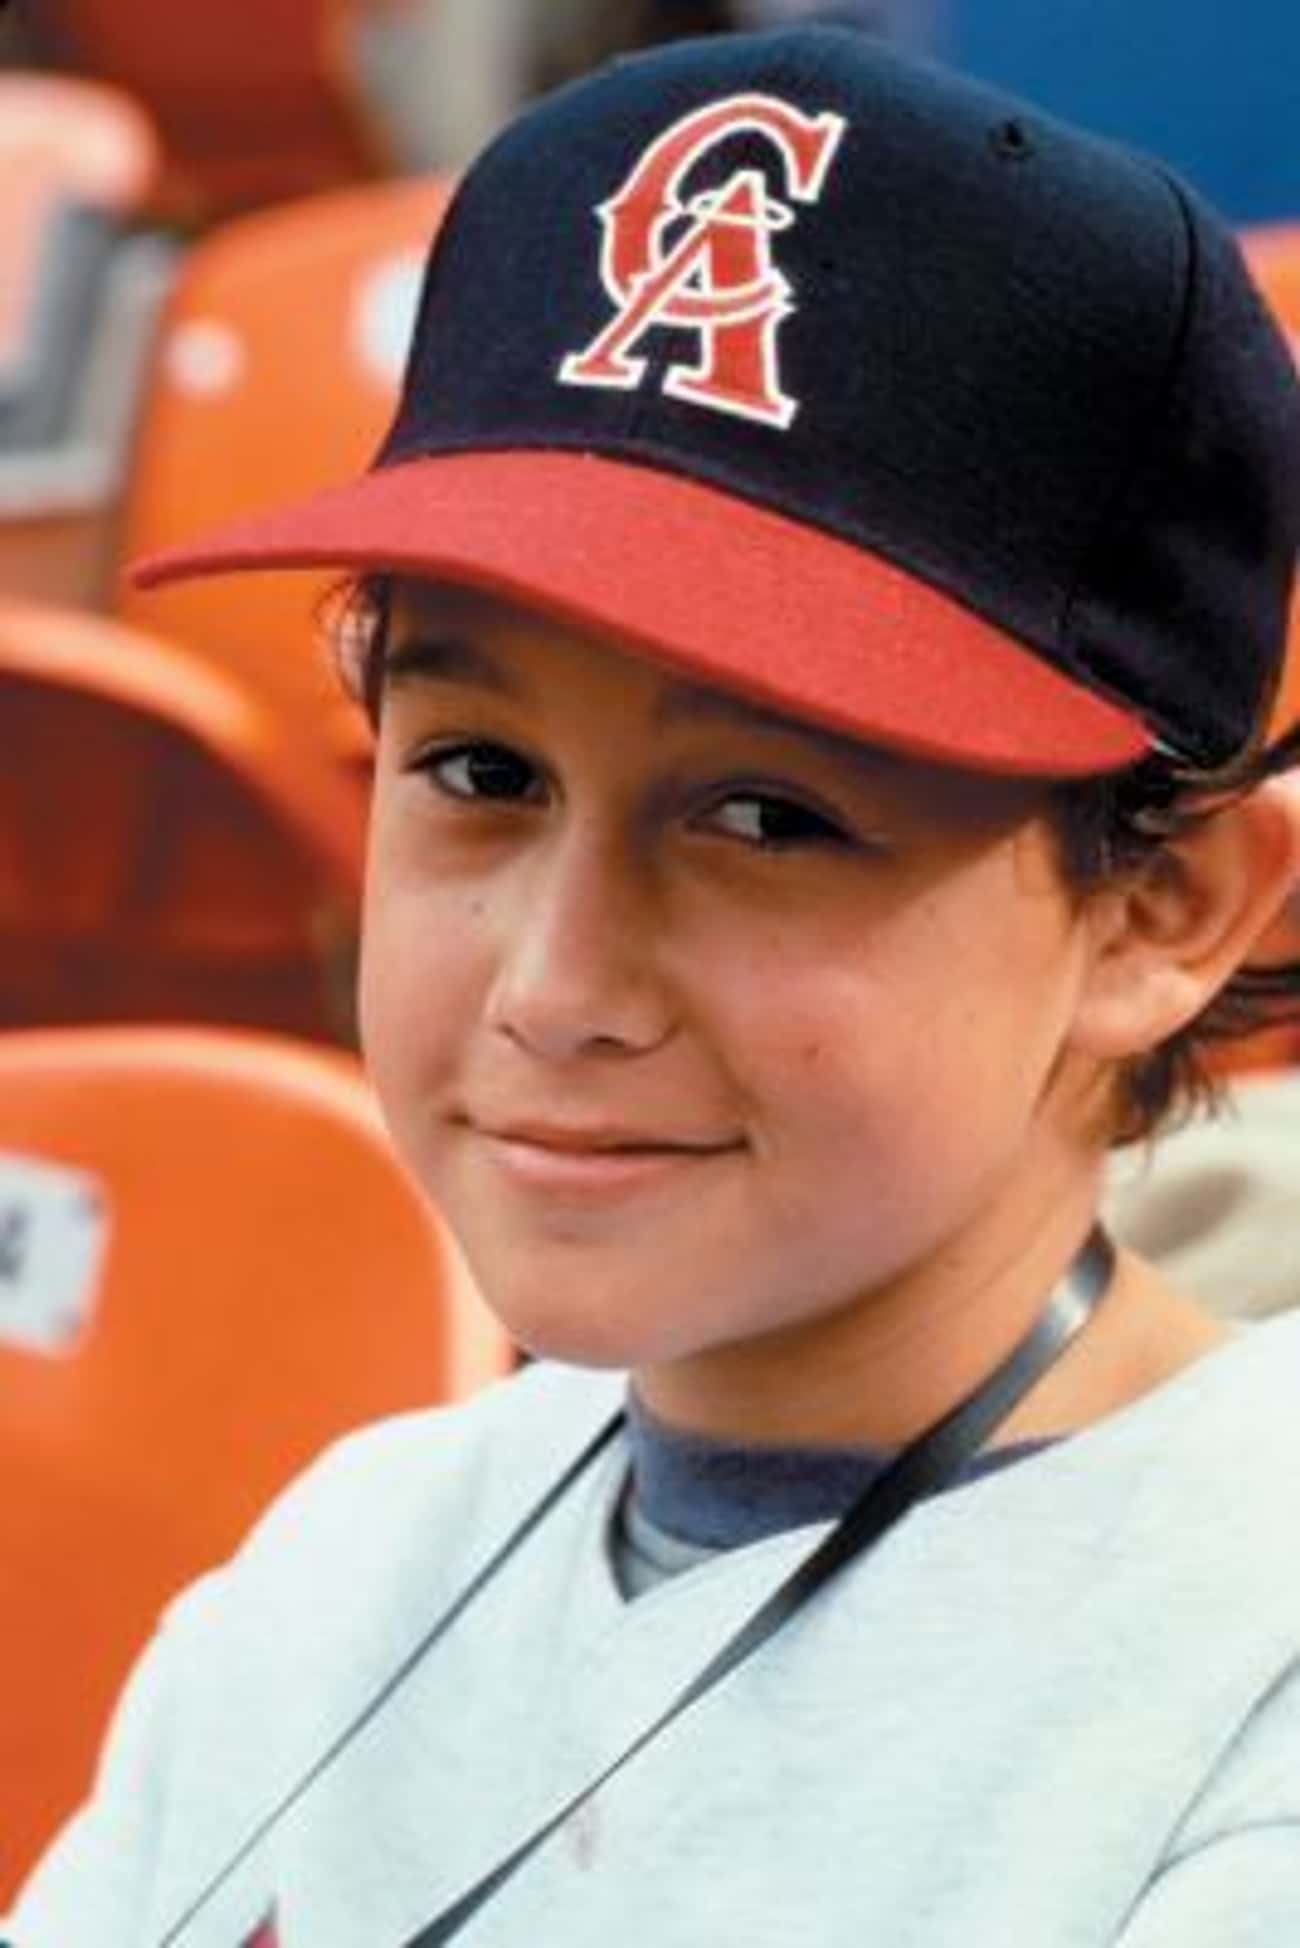 Young Joseph Gordon-Levitt in Baseball Jersey